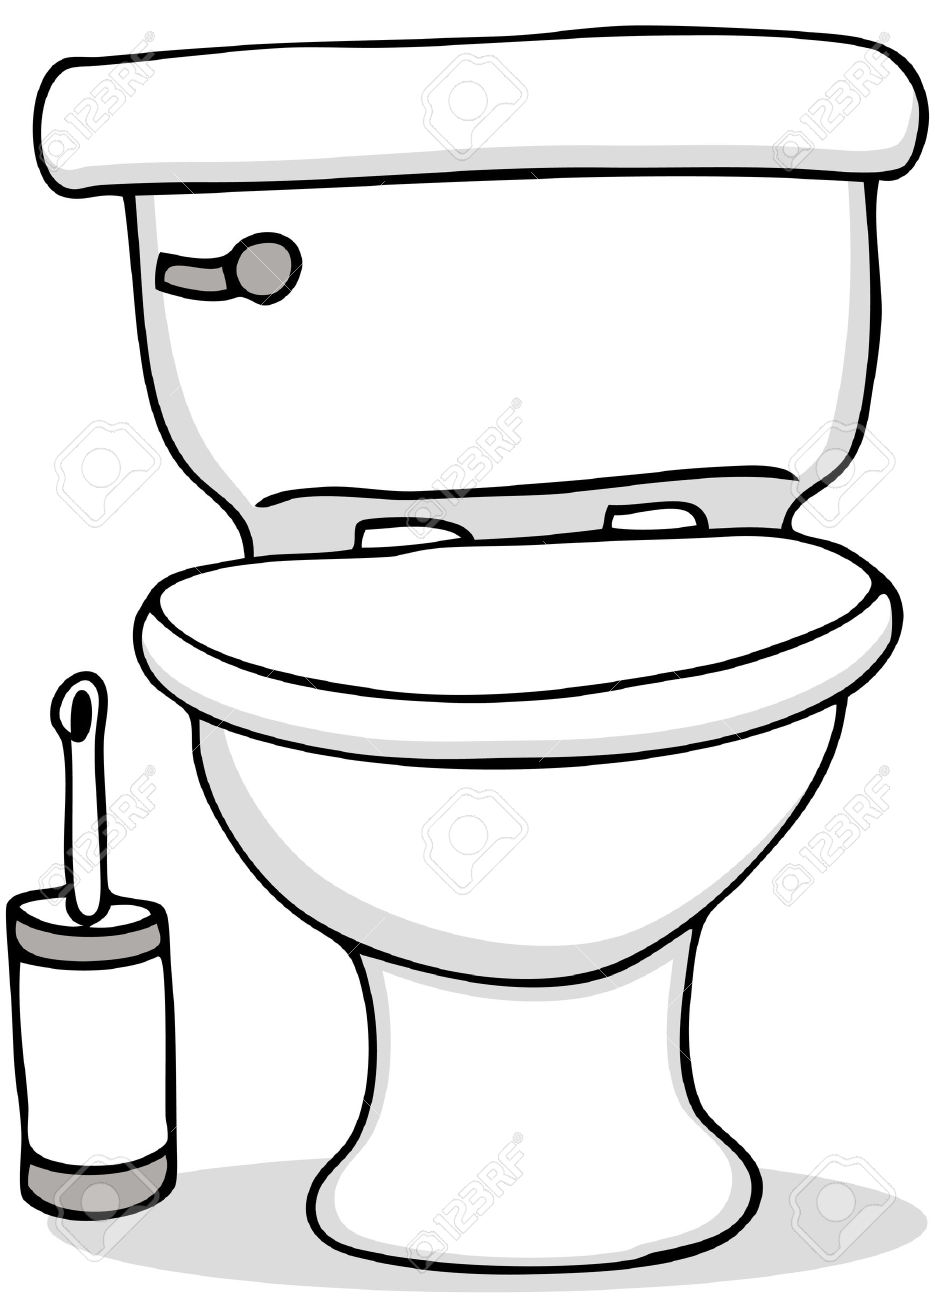 Cartoon Toilet Images Clipart | Free download best Cartoon ...
